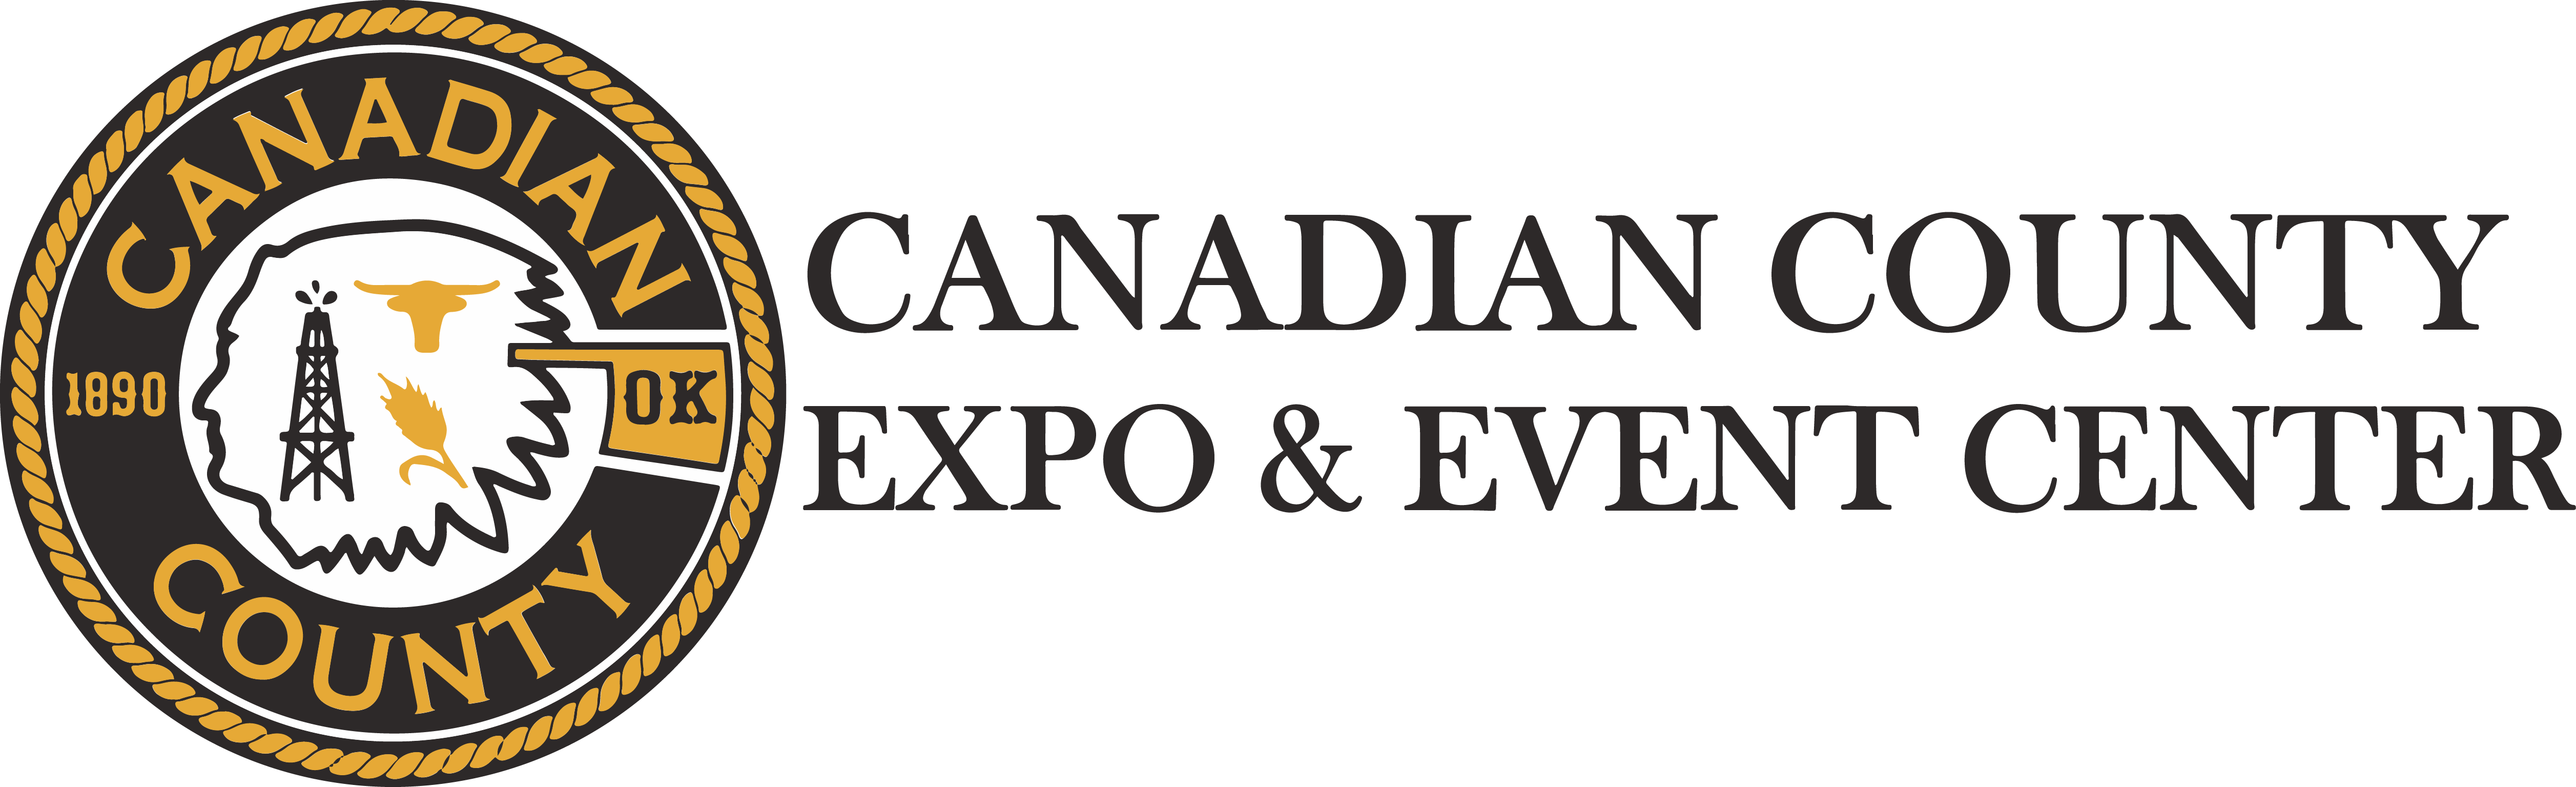 Canadian County Expo & Event Center Logo